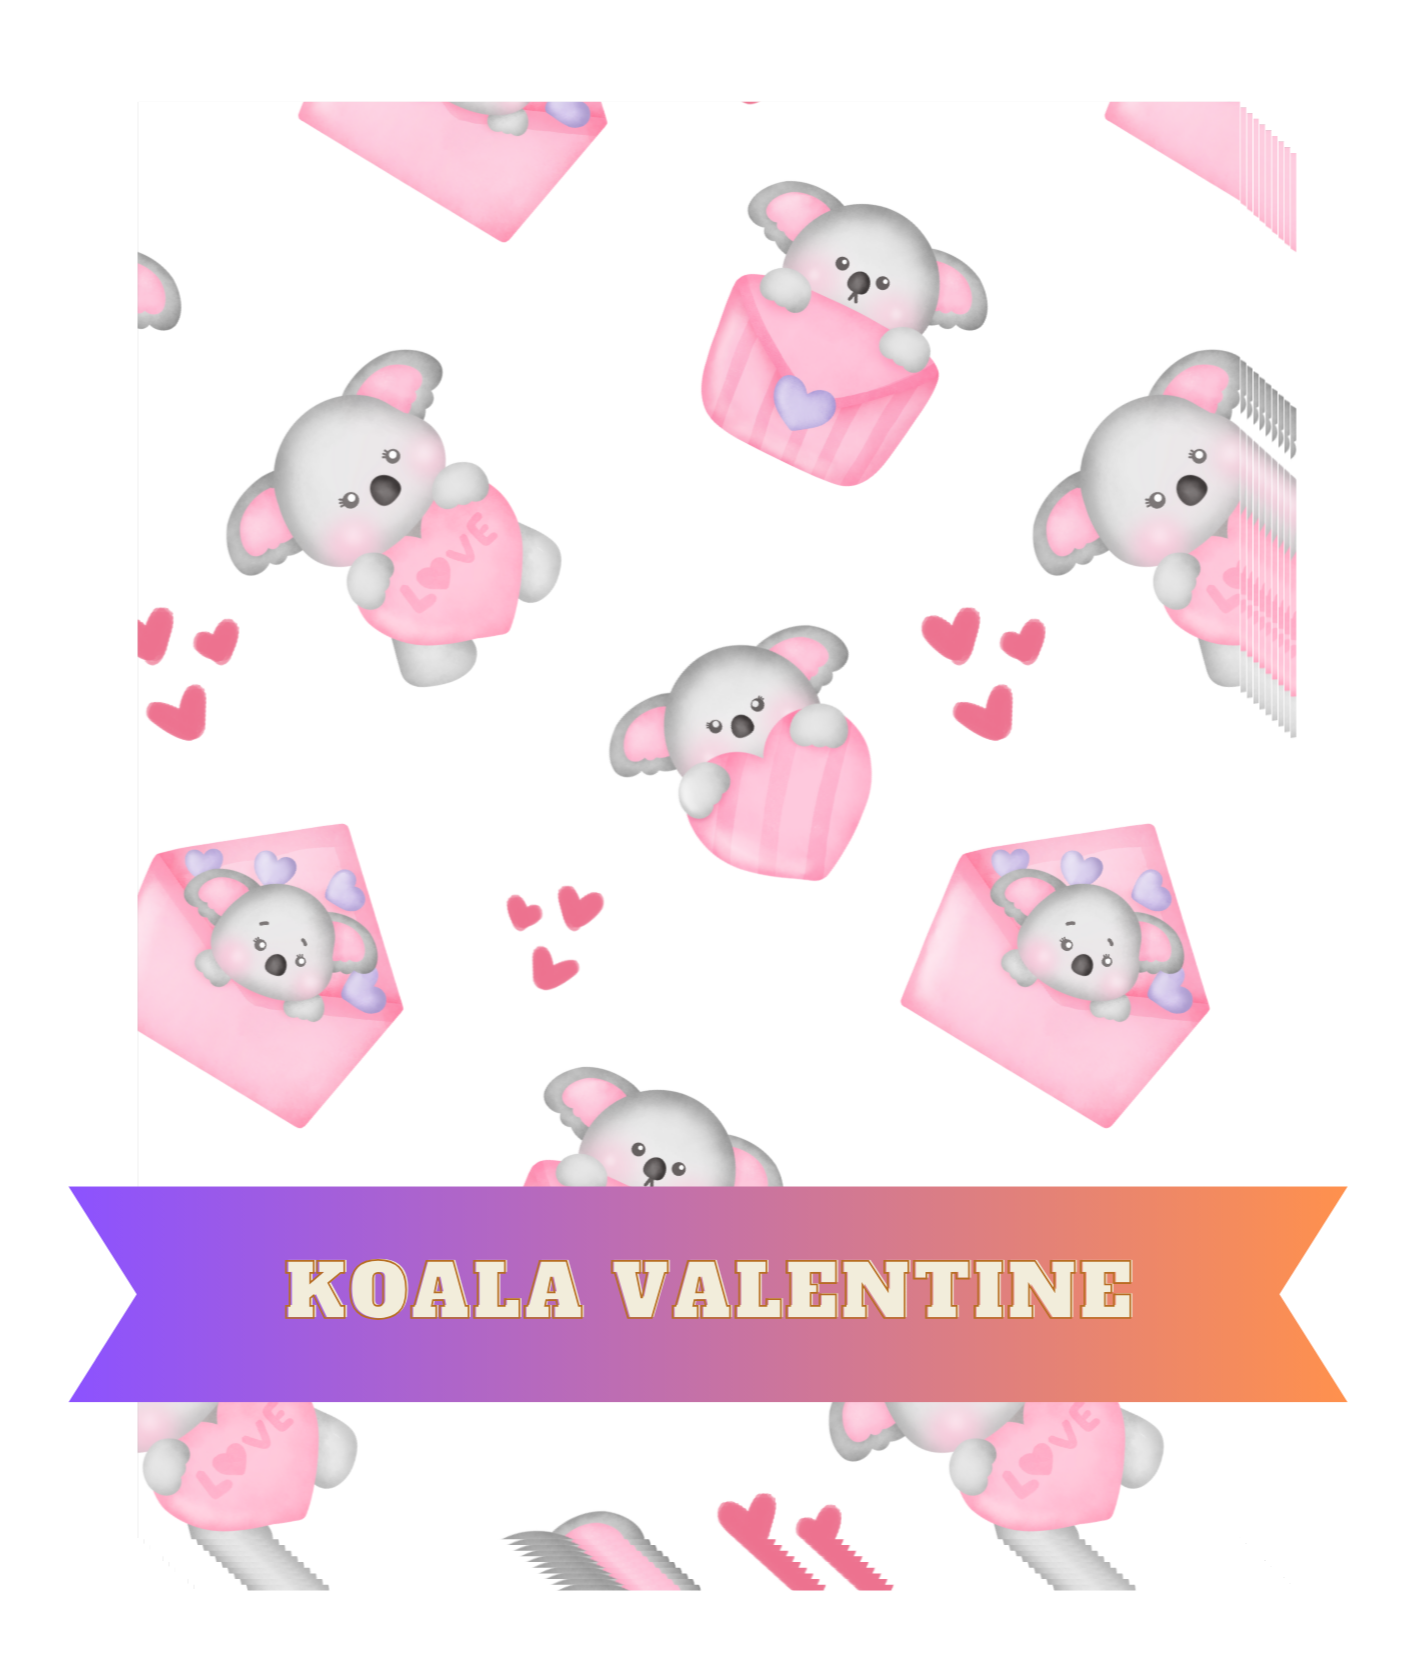 Koala Valentine Decorative Diamond Painting Release Papers